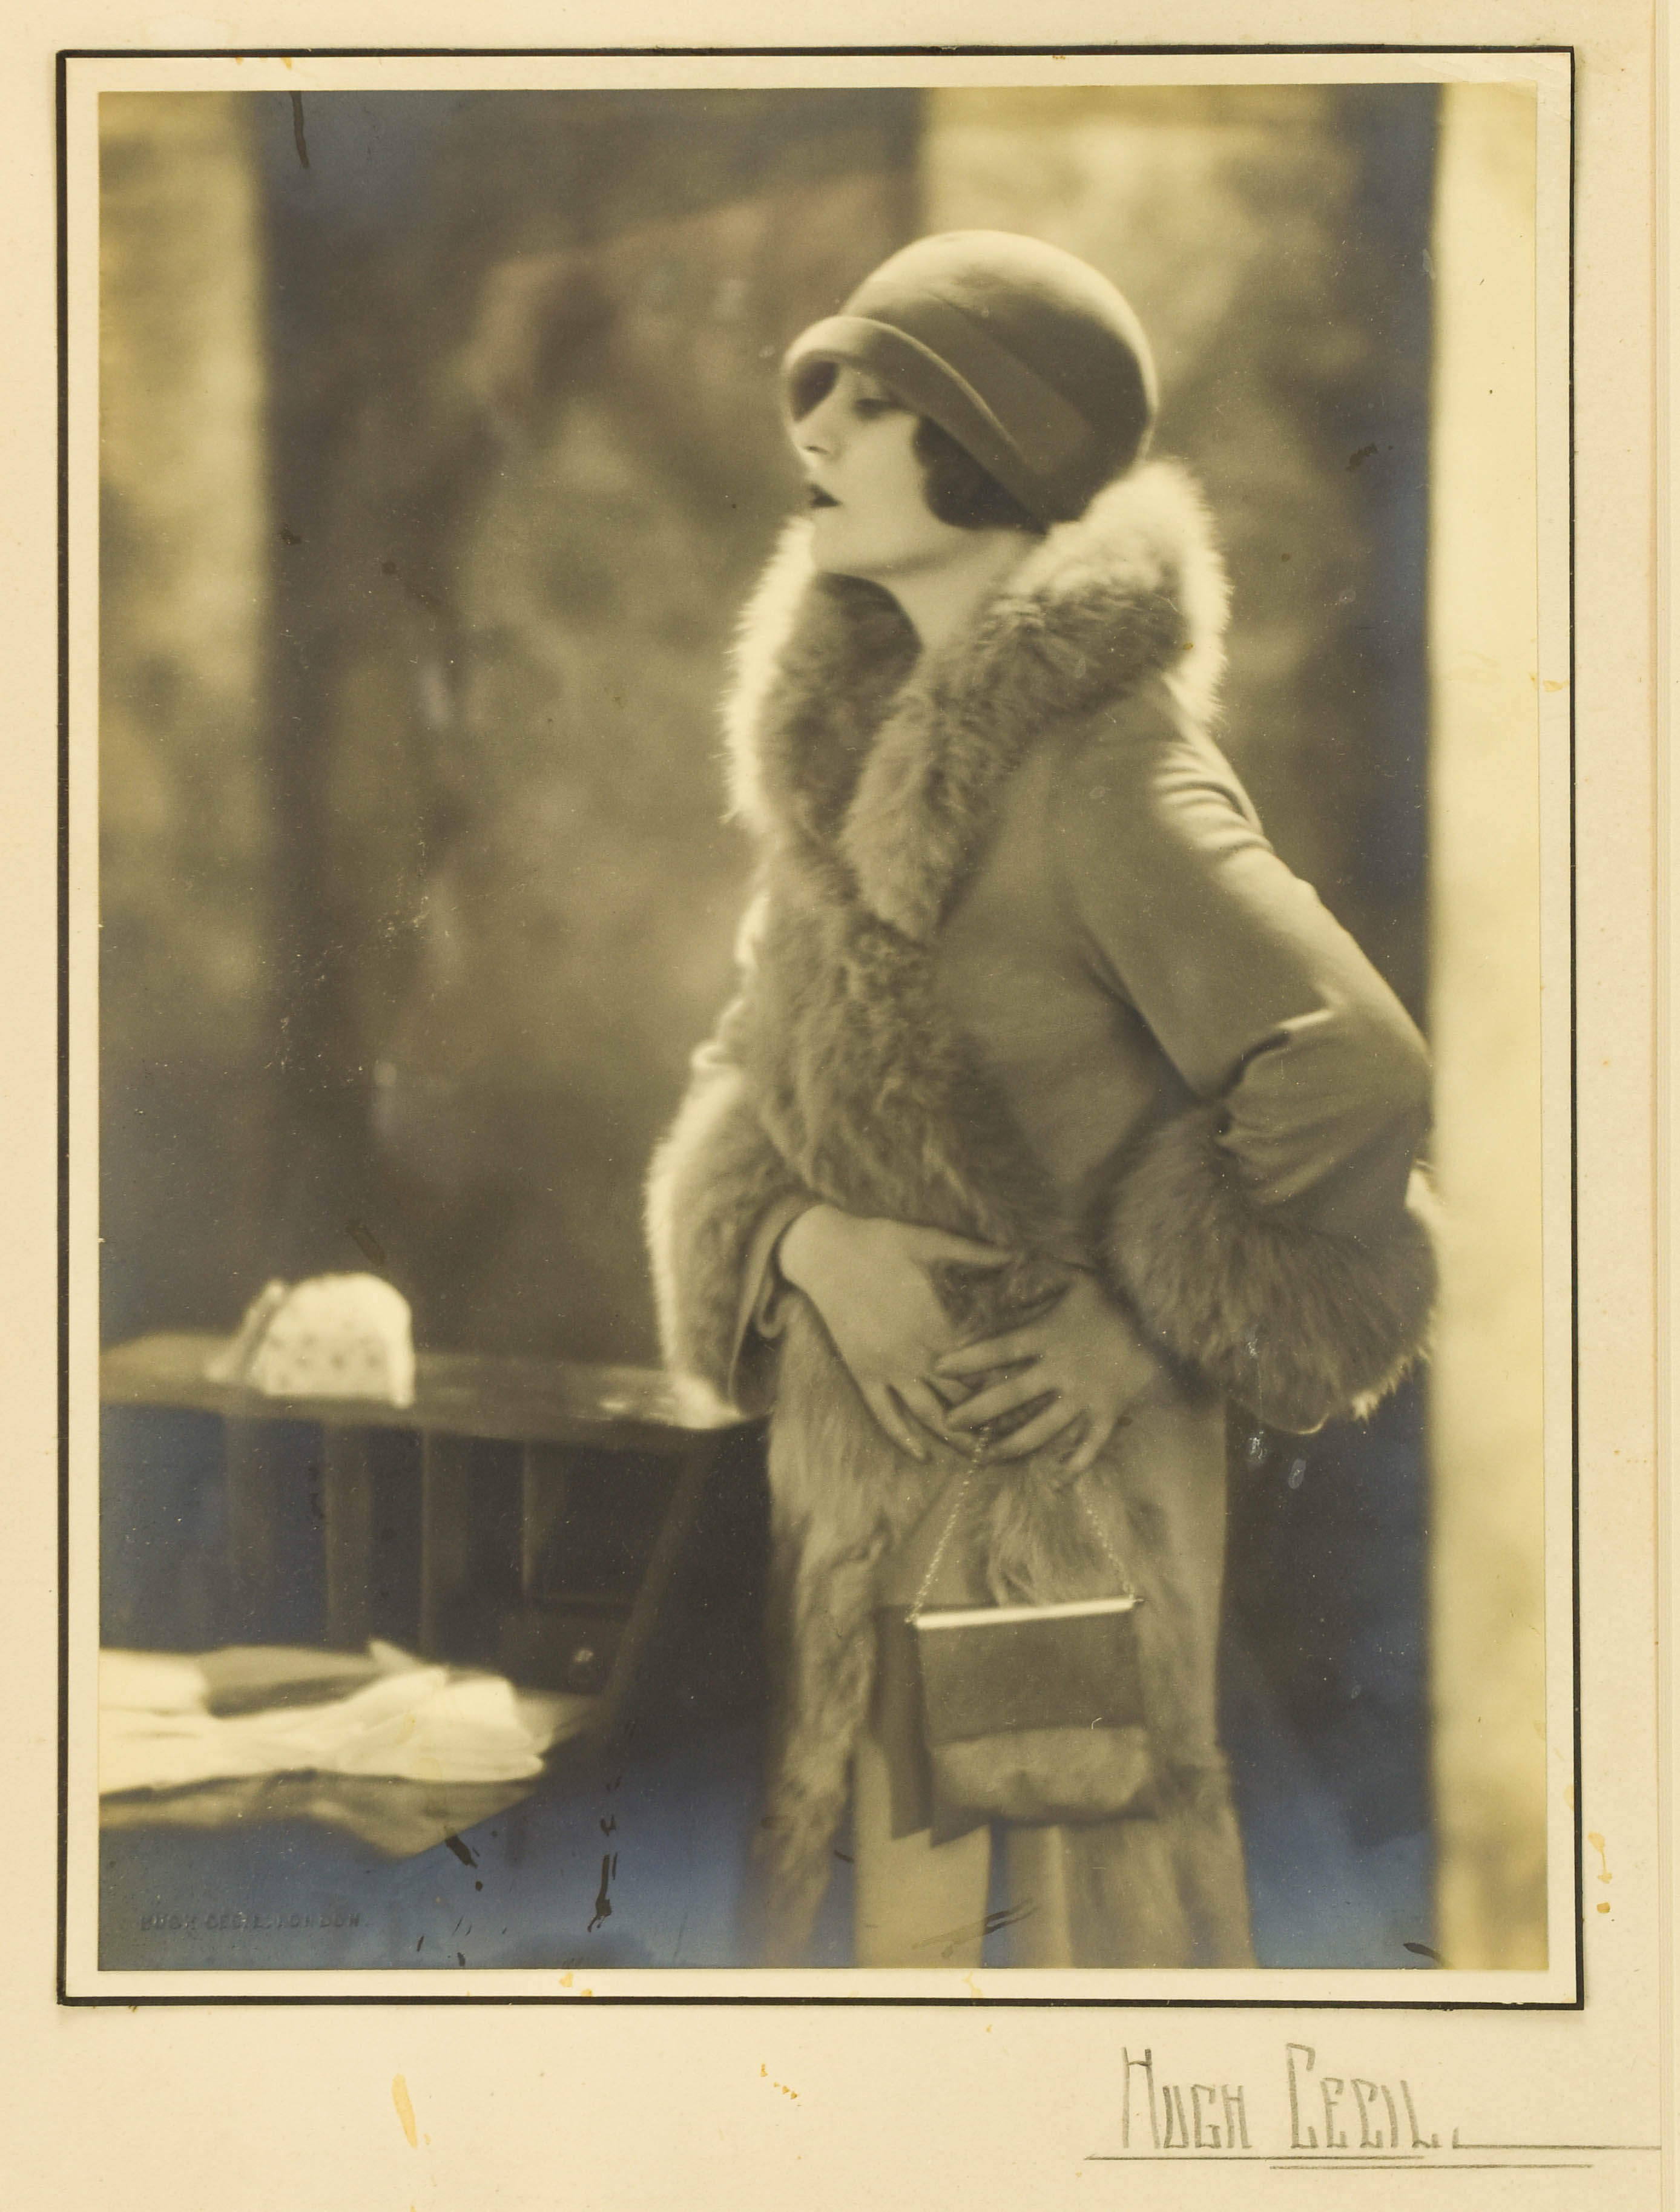 Hugh Cecil Original Signed Photograph of Gertrude Lawrence